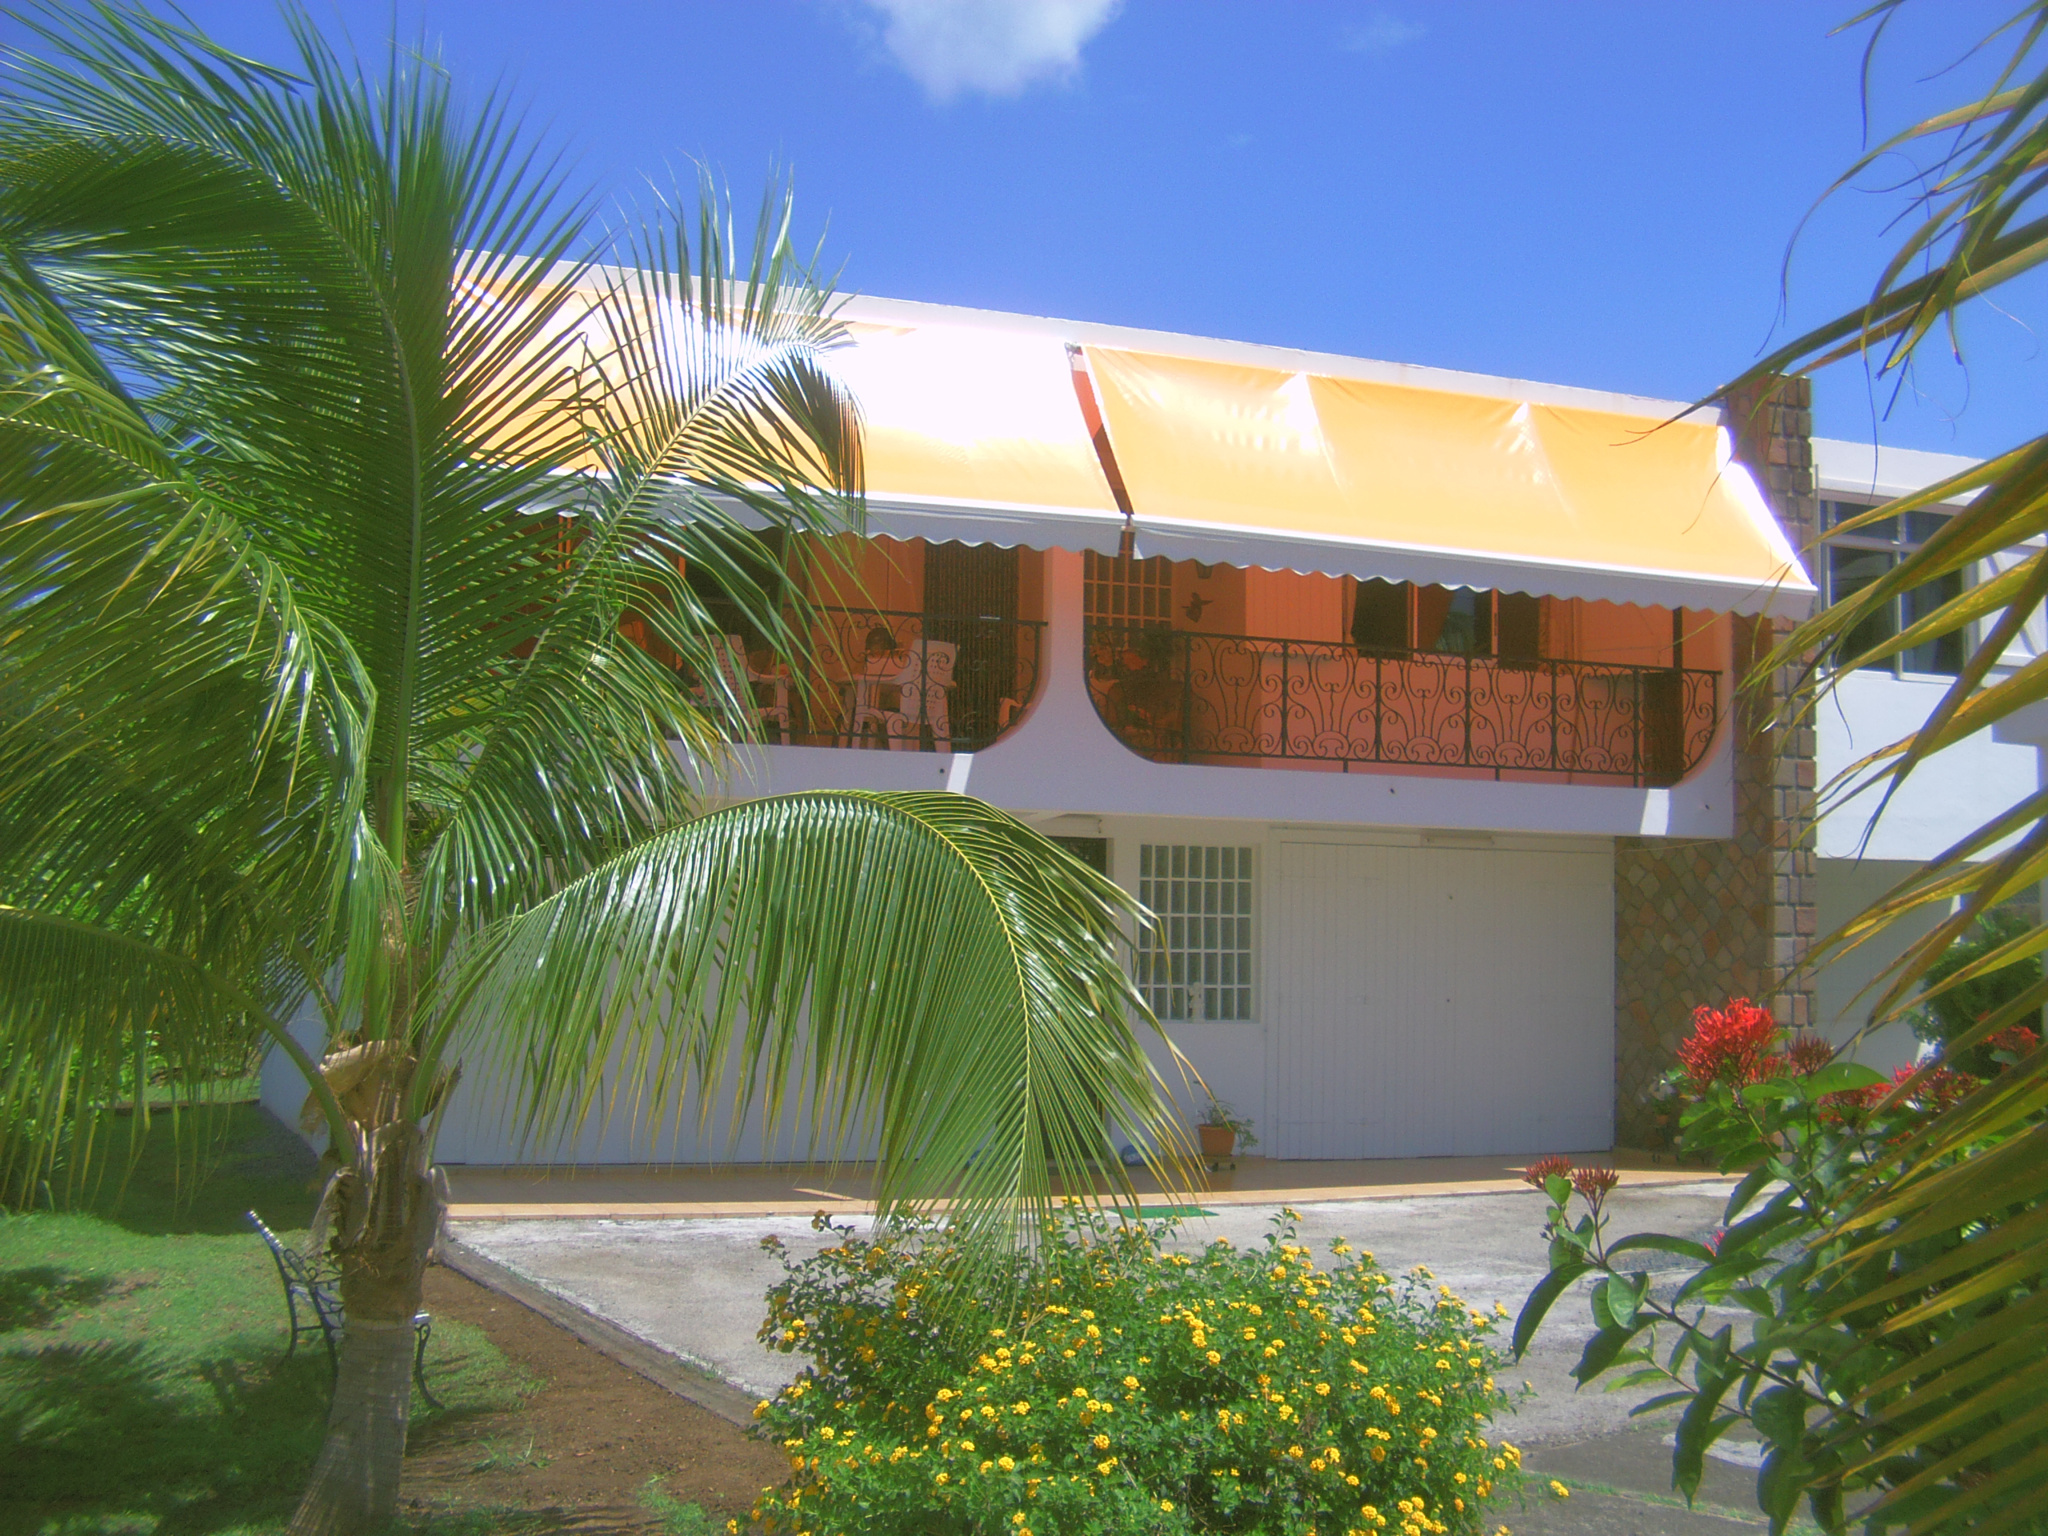  maison  Baillif vente Guadeloupe  baillif maison  tres 